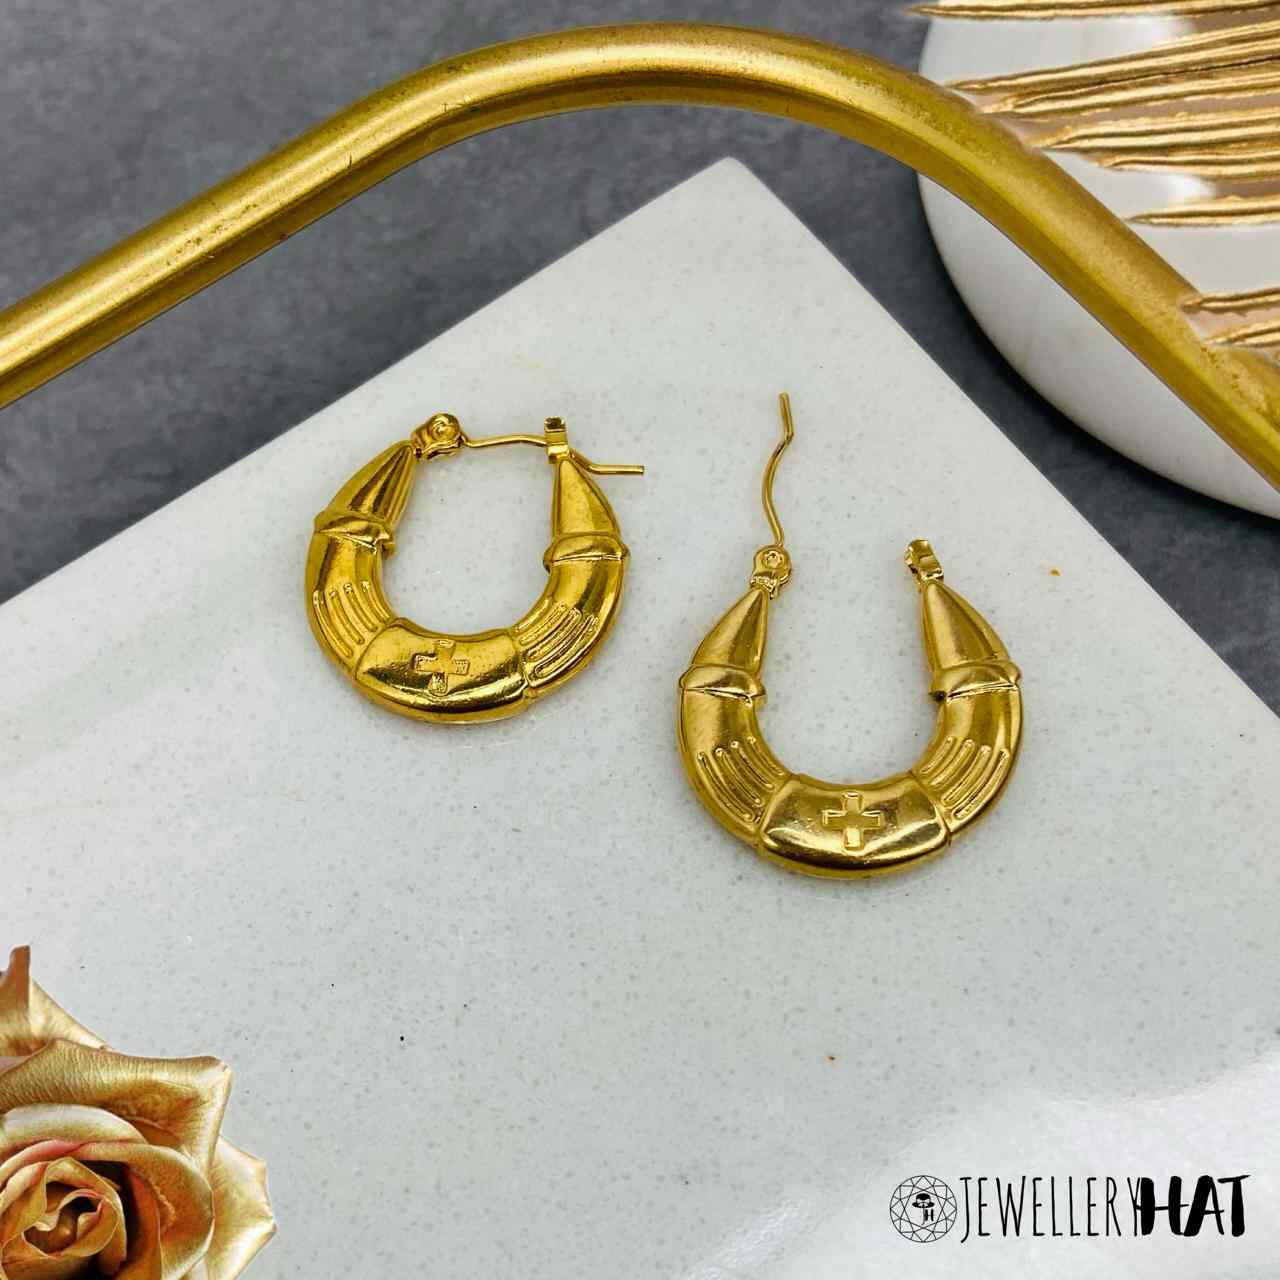 Latest Design Of Gold Earrings Bali